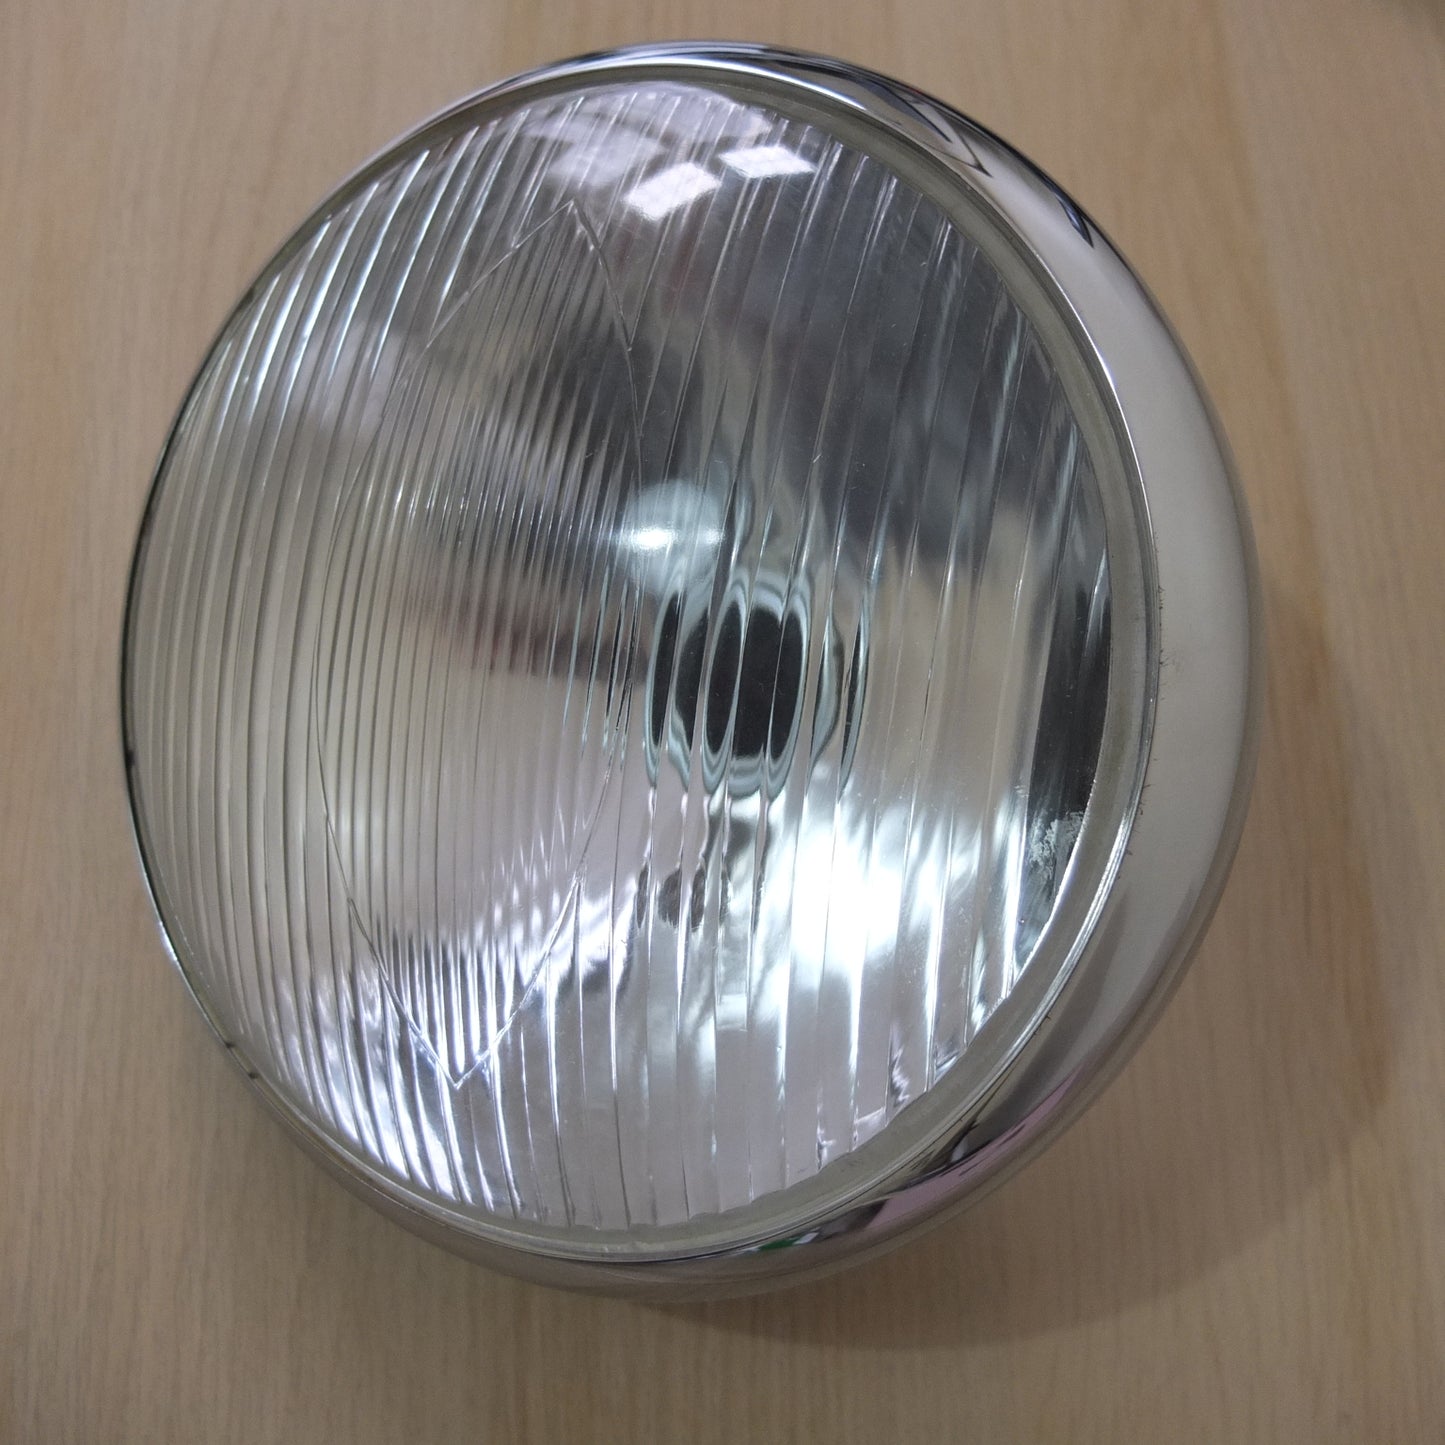 P5/060C Headlamp Glass and reflector unit 8" pattern